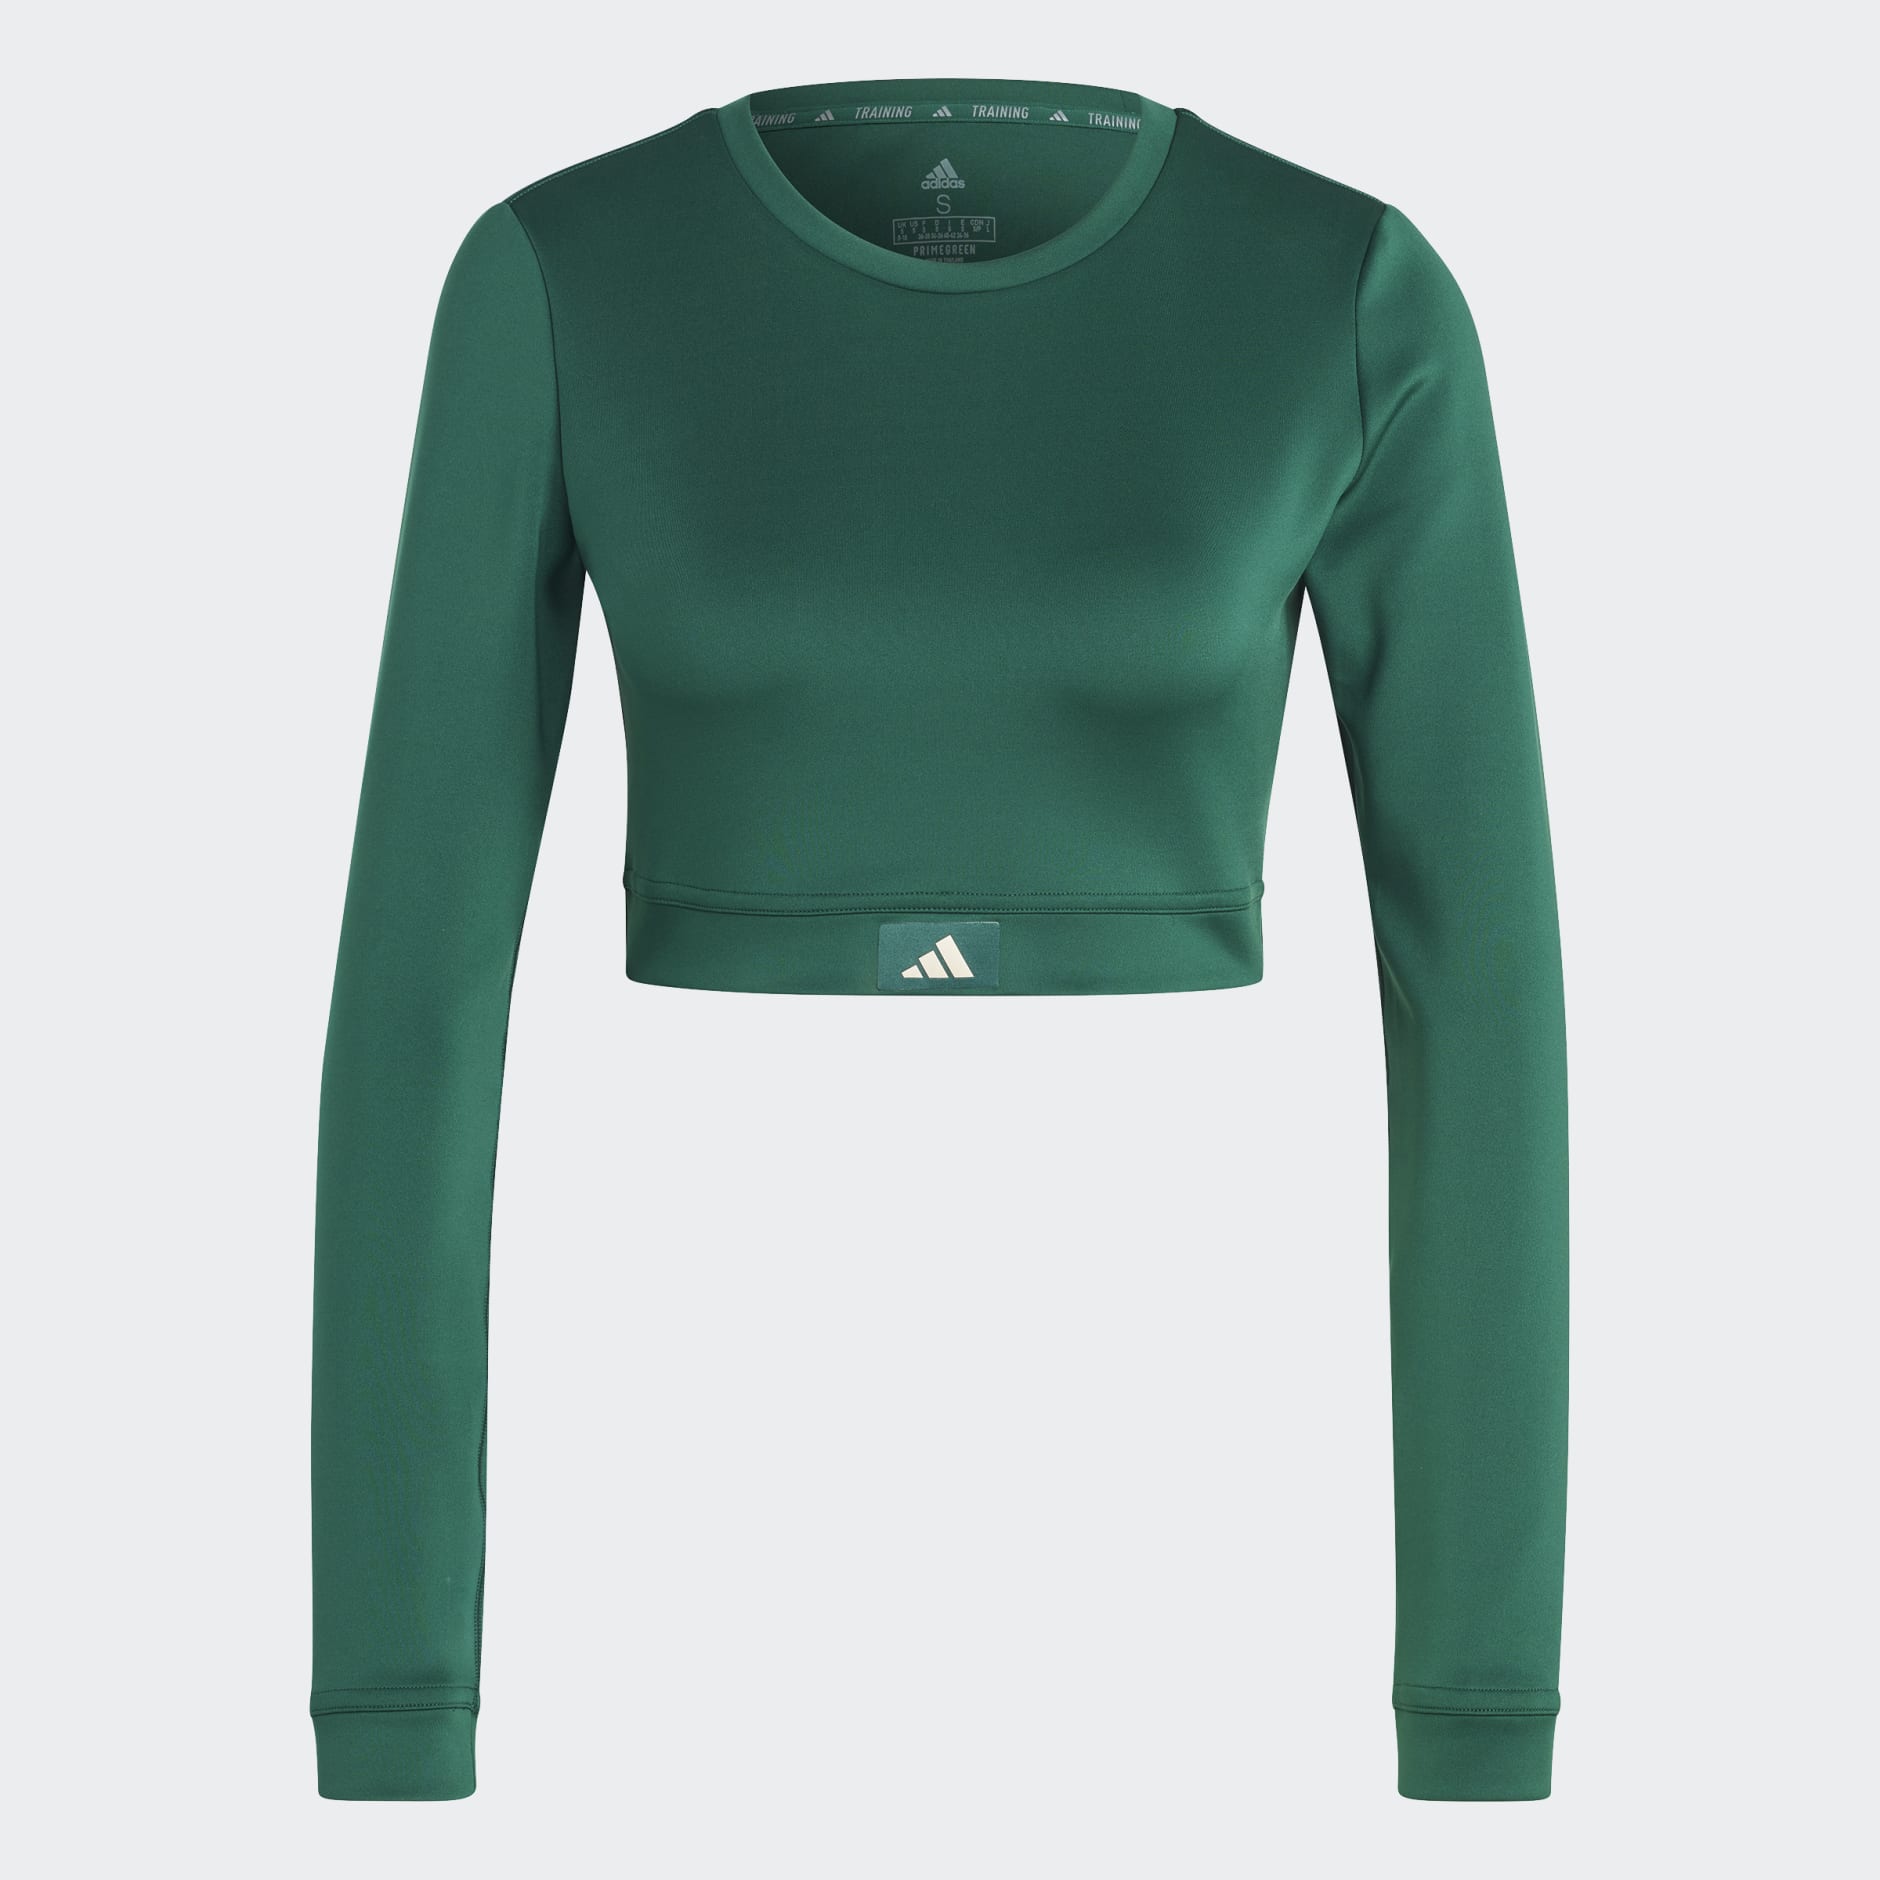 Clothing - Sports Club Long Sleeve Crop Tee - Green | adidas South Africa